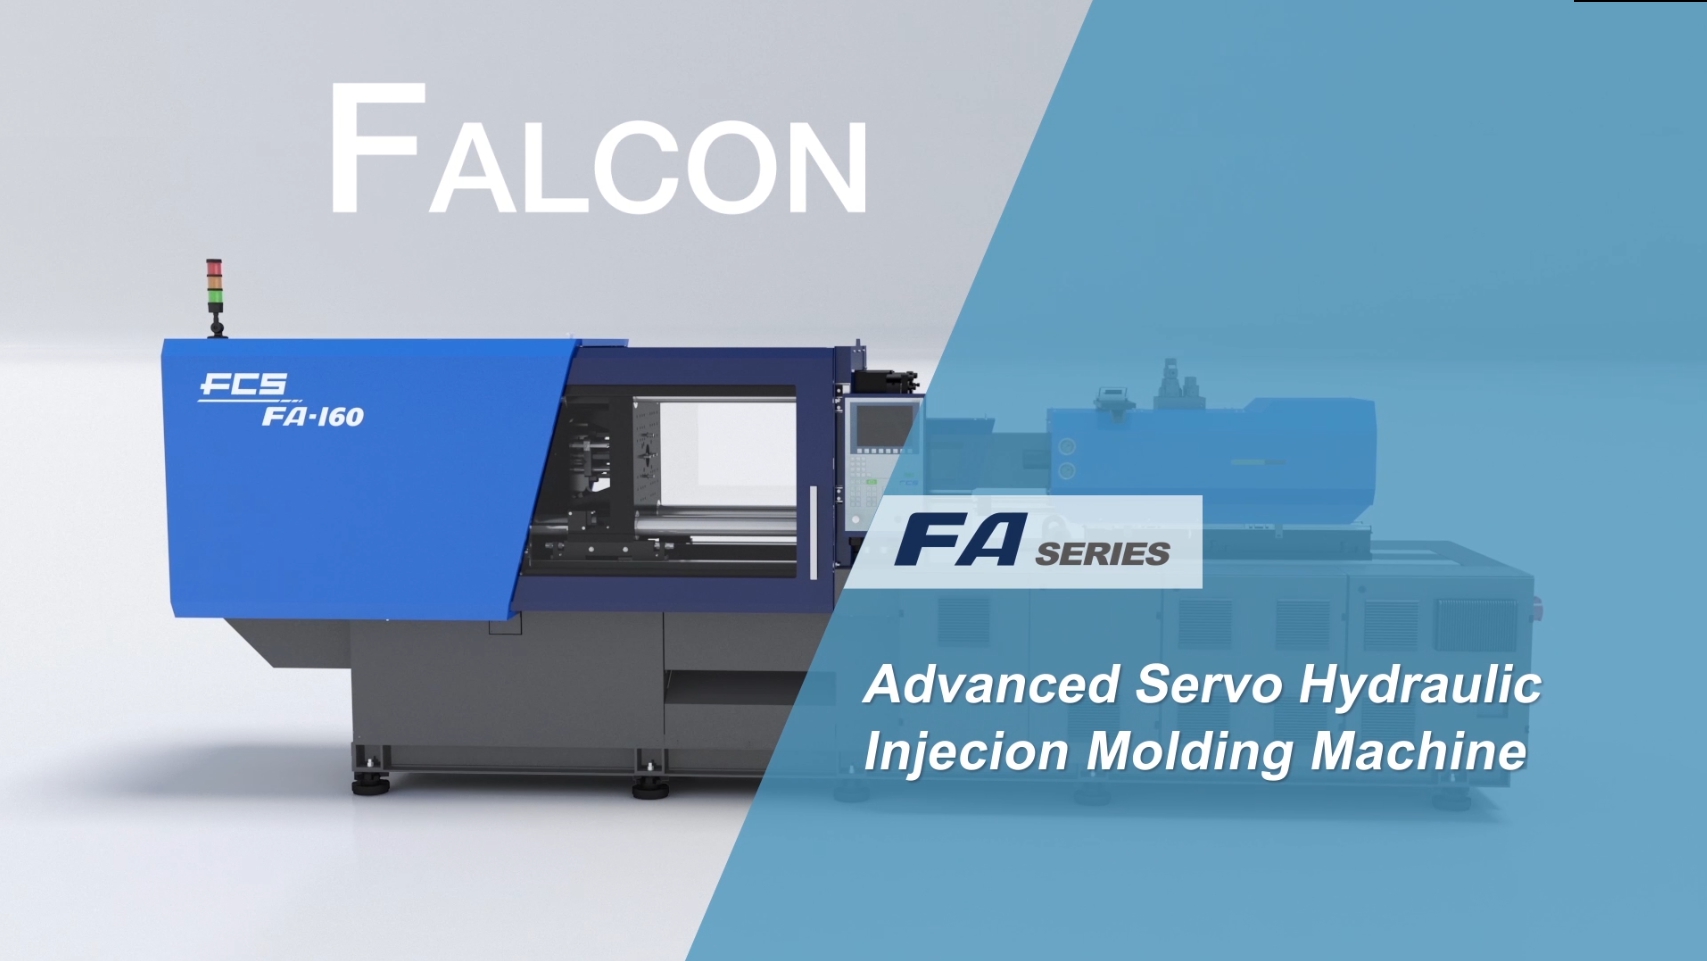 Advanced Servo Hydraulic Injection Molding Machine (FA Series)